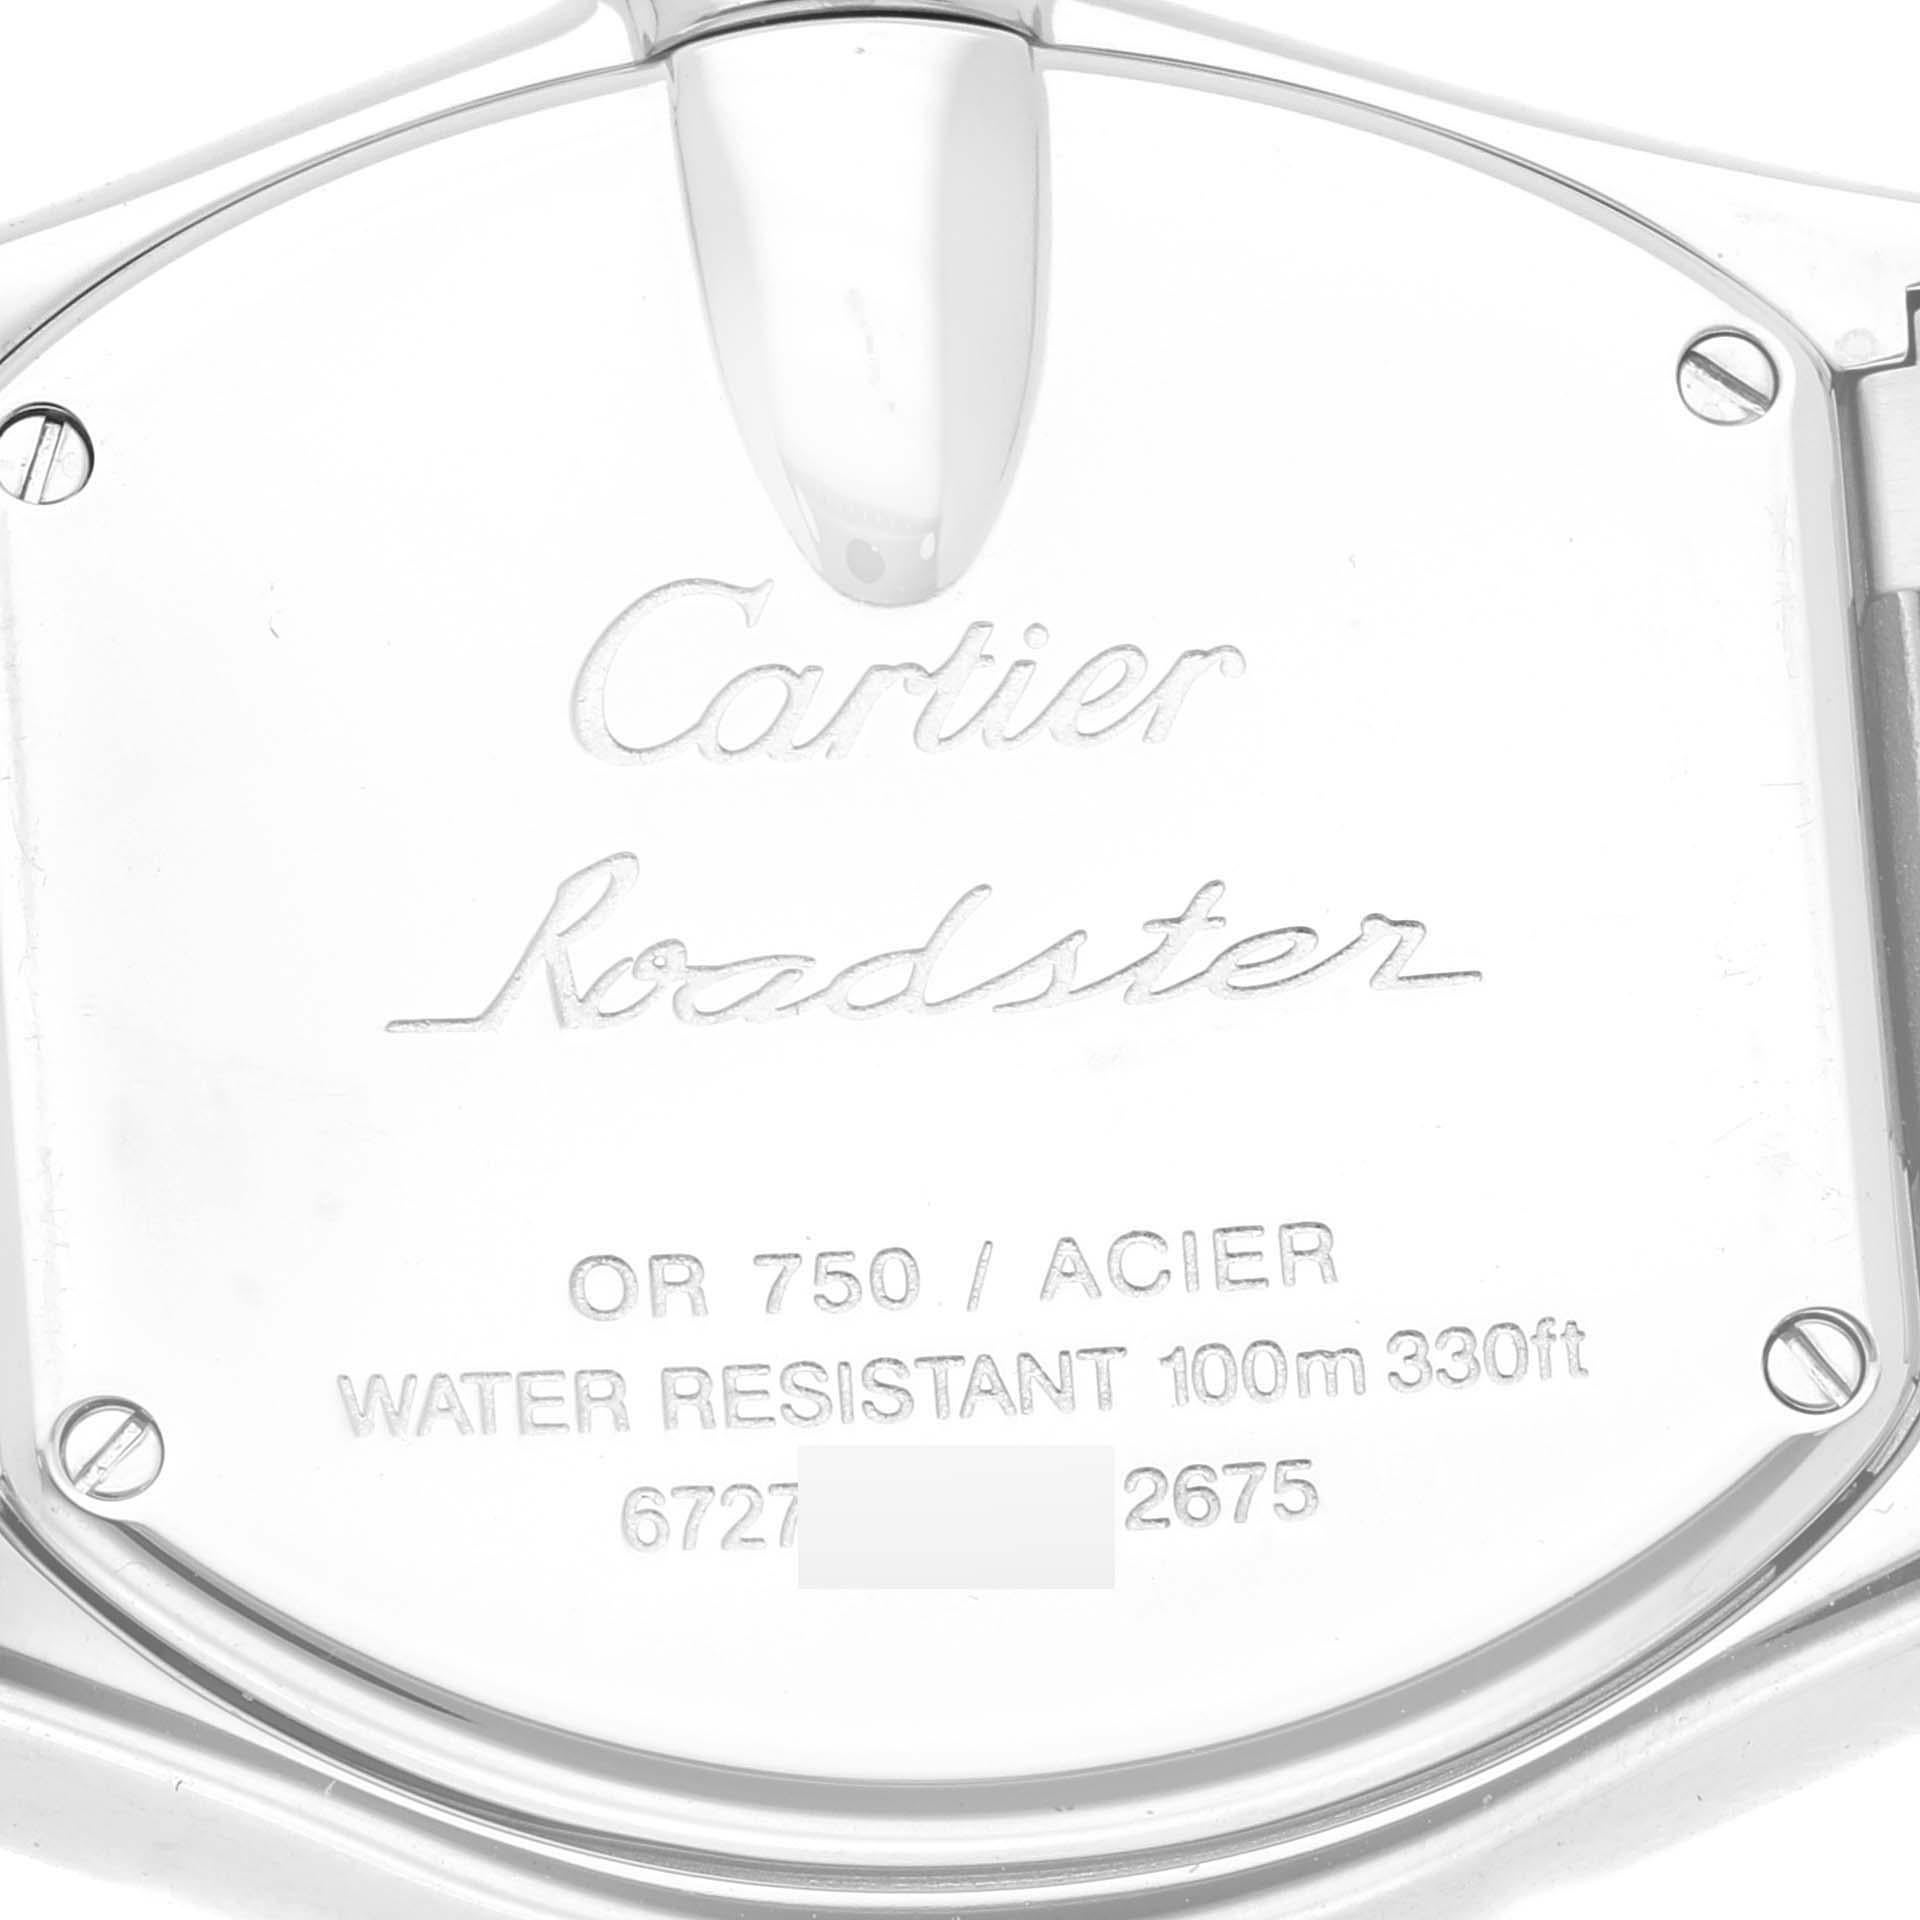 Cartier Roadster Steel Yellow Gold Ladies Watch W62026Y4 2